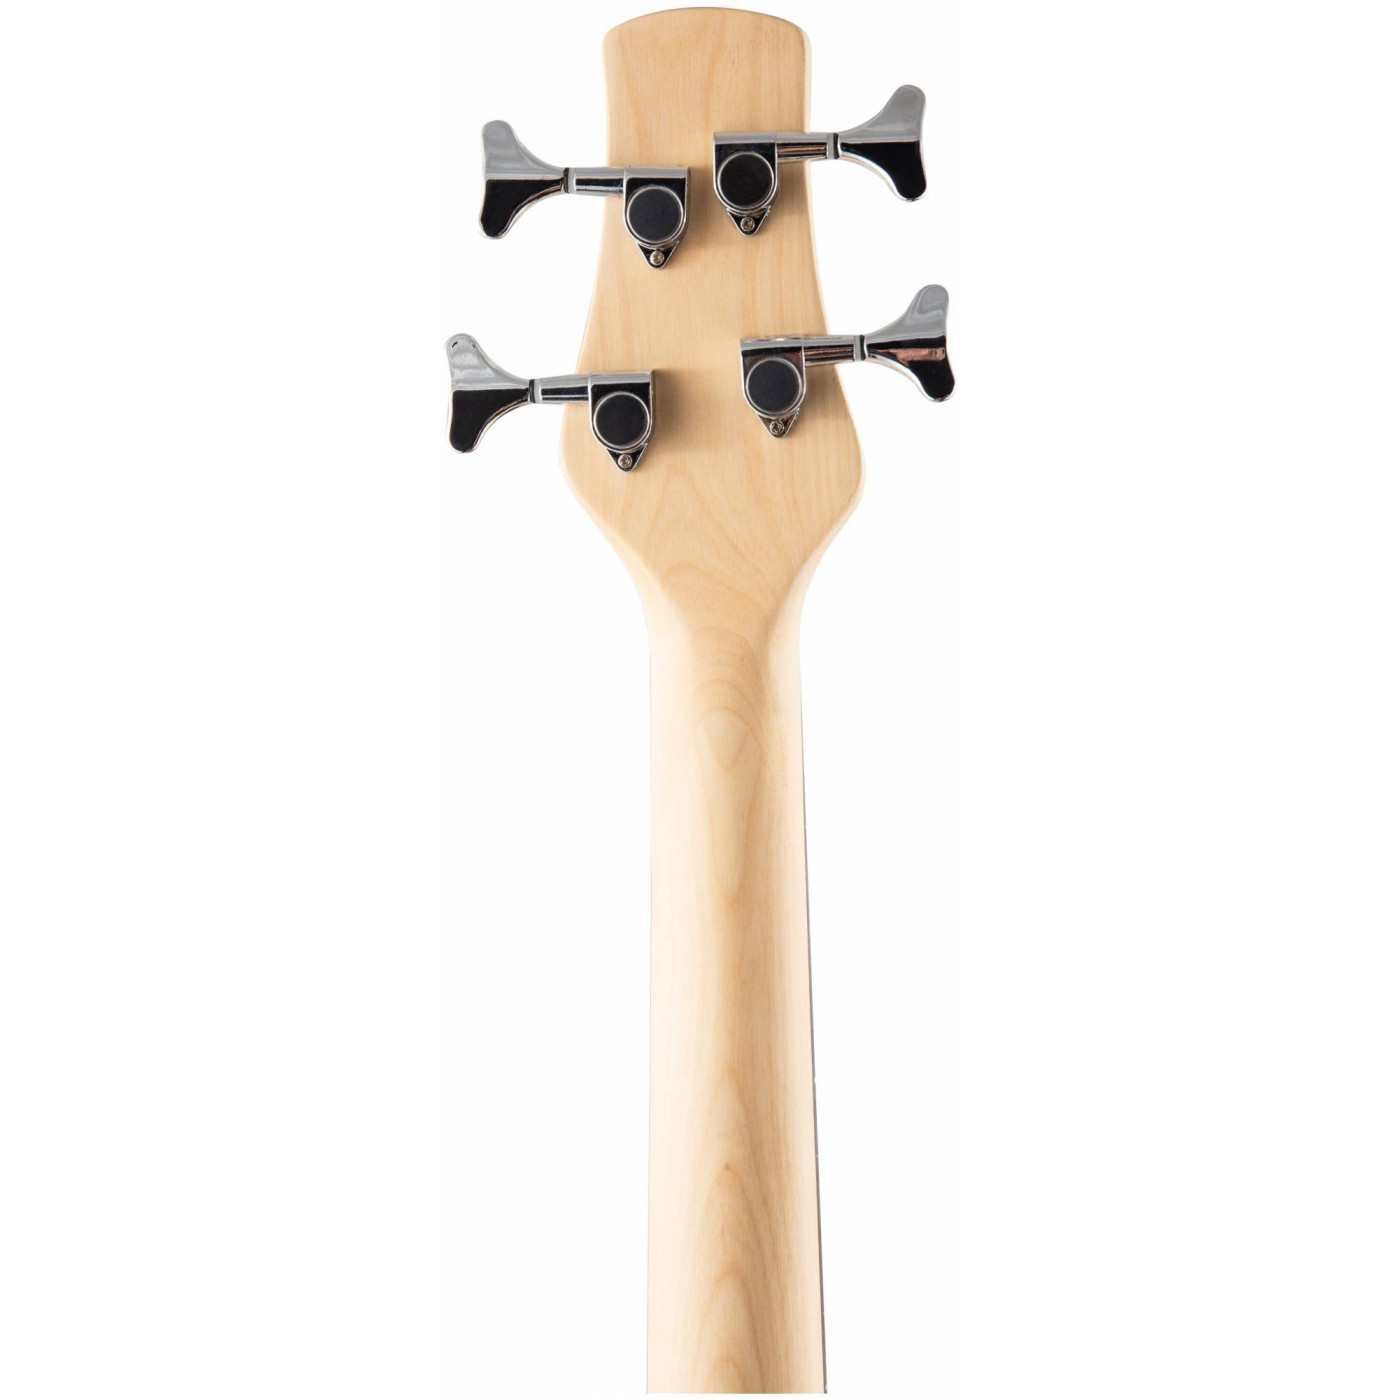 Terris THB-43 SB бас-гитара 4 струны, цвет санберст